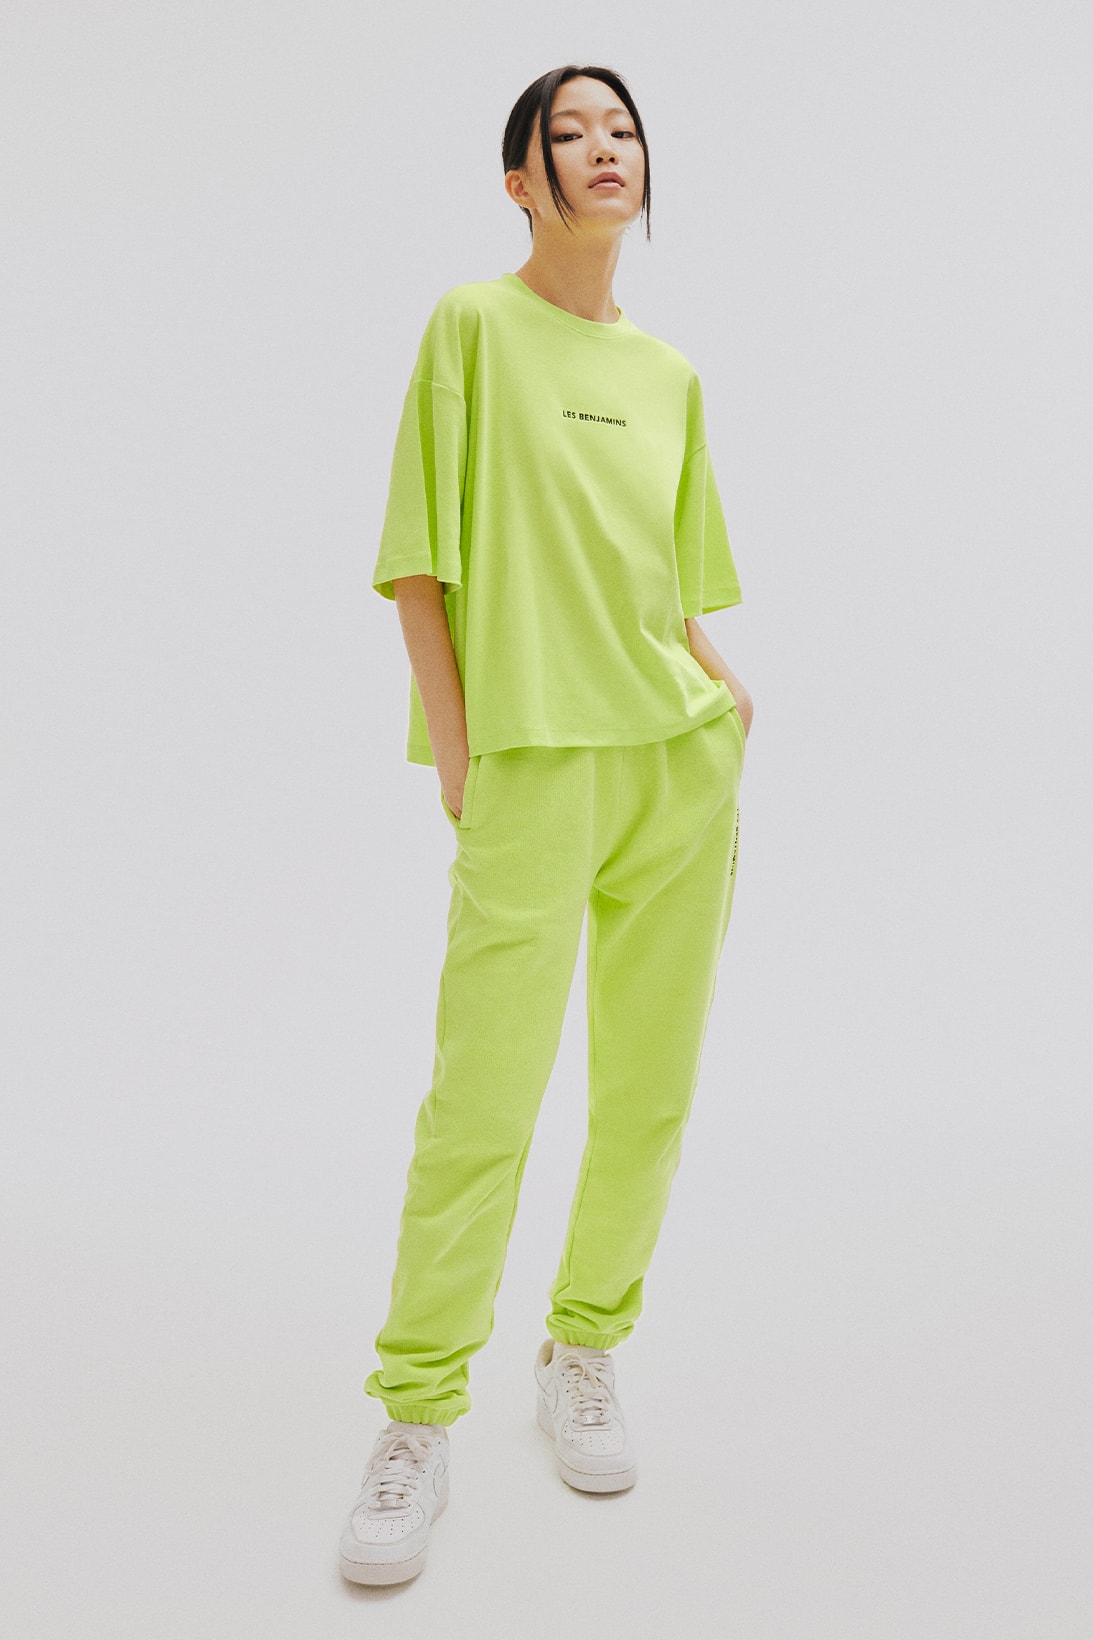 Les Benjamins "Essentials 4.0" Collection Streetwear T-Shirt Sweatpants Kermit Green